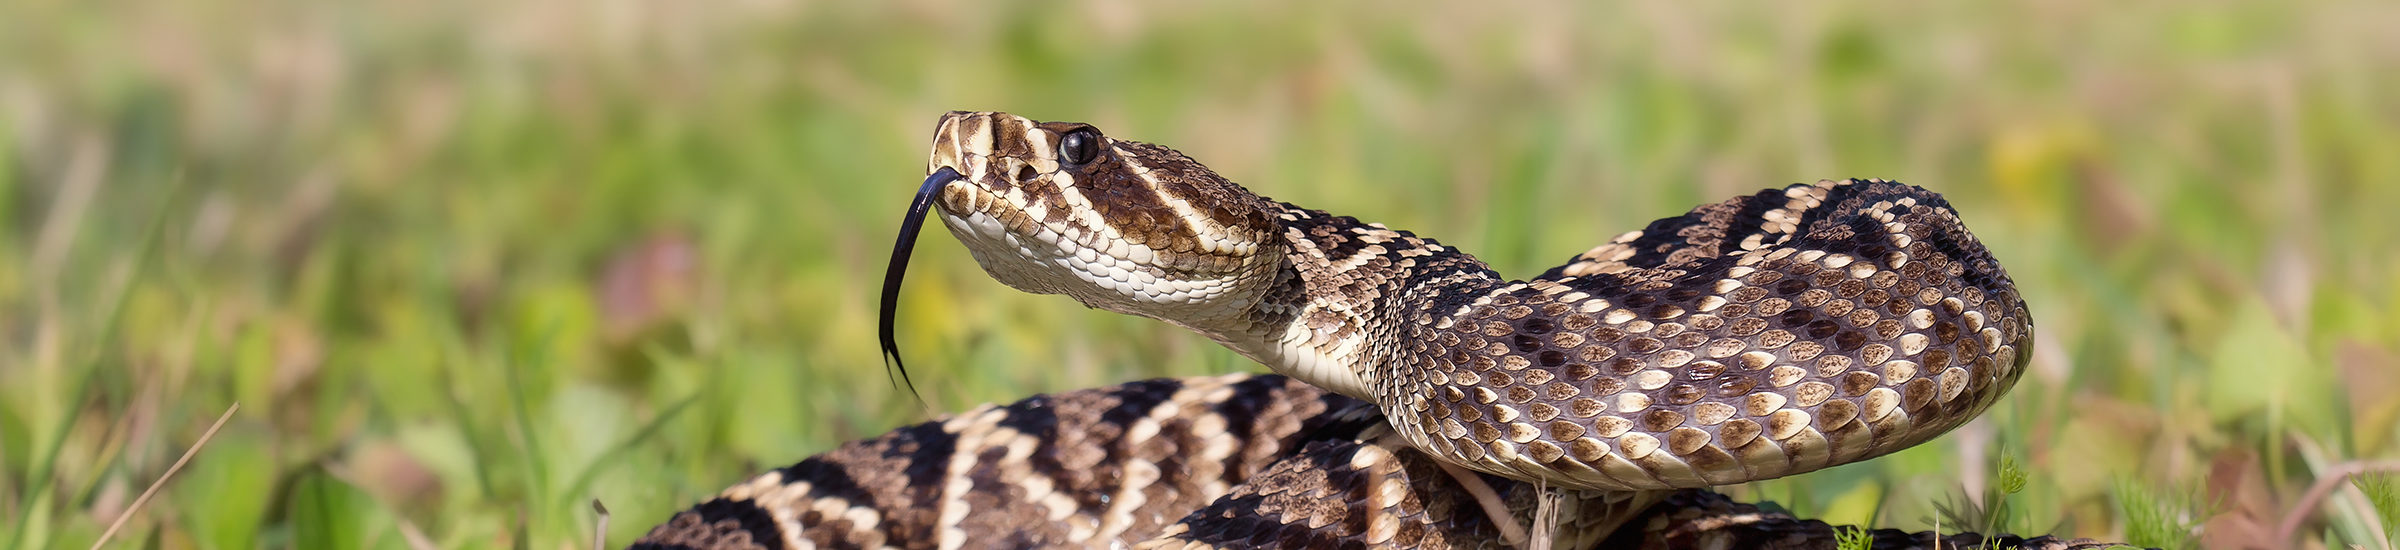 Close up of eastern diamondback rattlesnake in grass.